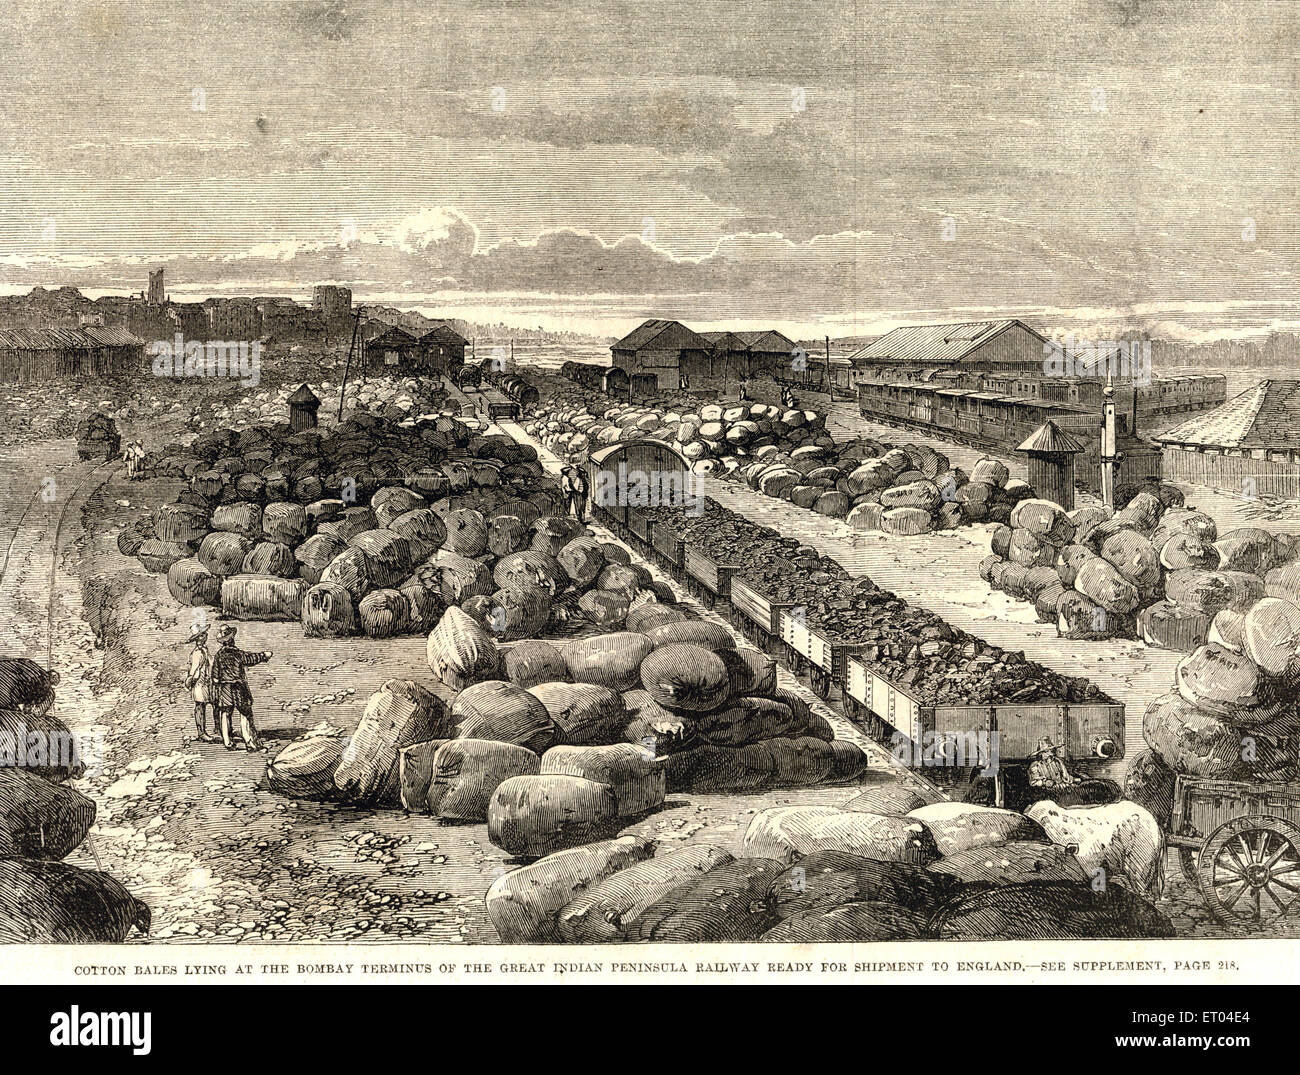 Cotton bales, Bombay Terminus, Great Indian Peninsula Railway for shipment to England, Bombay, Mumbai, Maharashtra, India, old vintage 1800s engraving Stock Photo